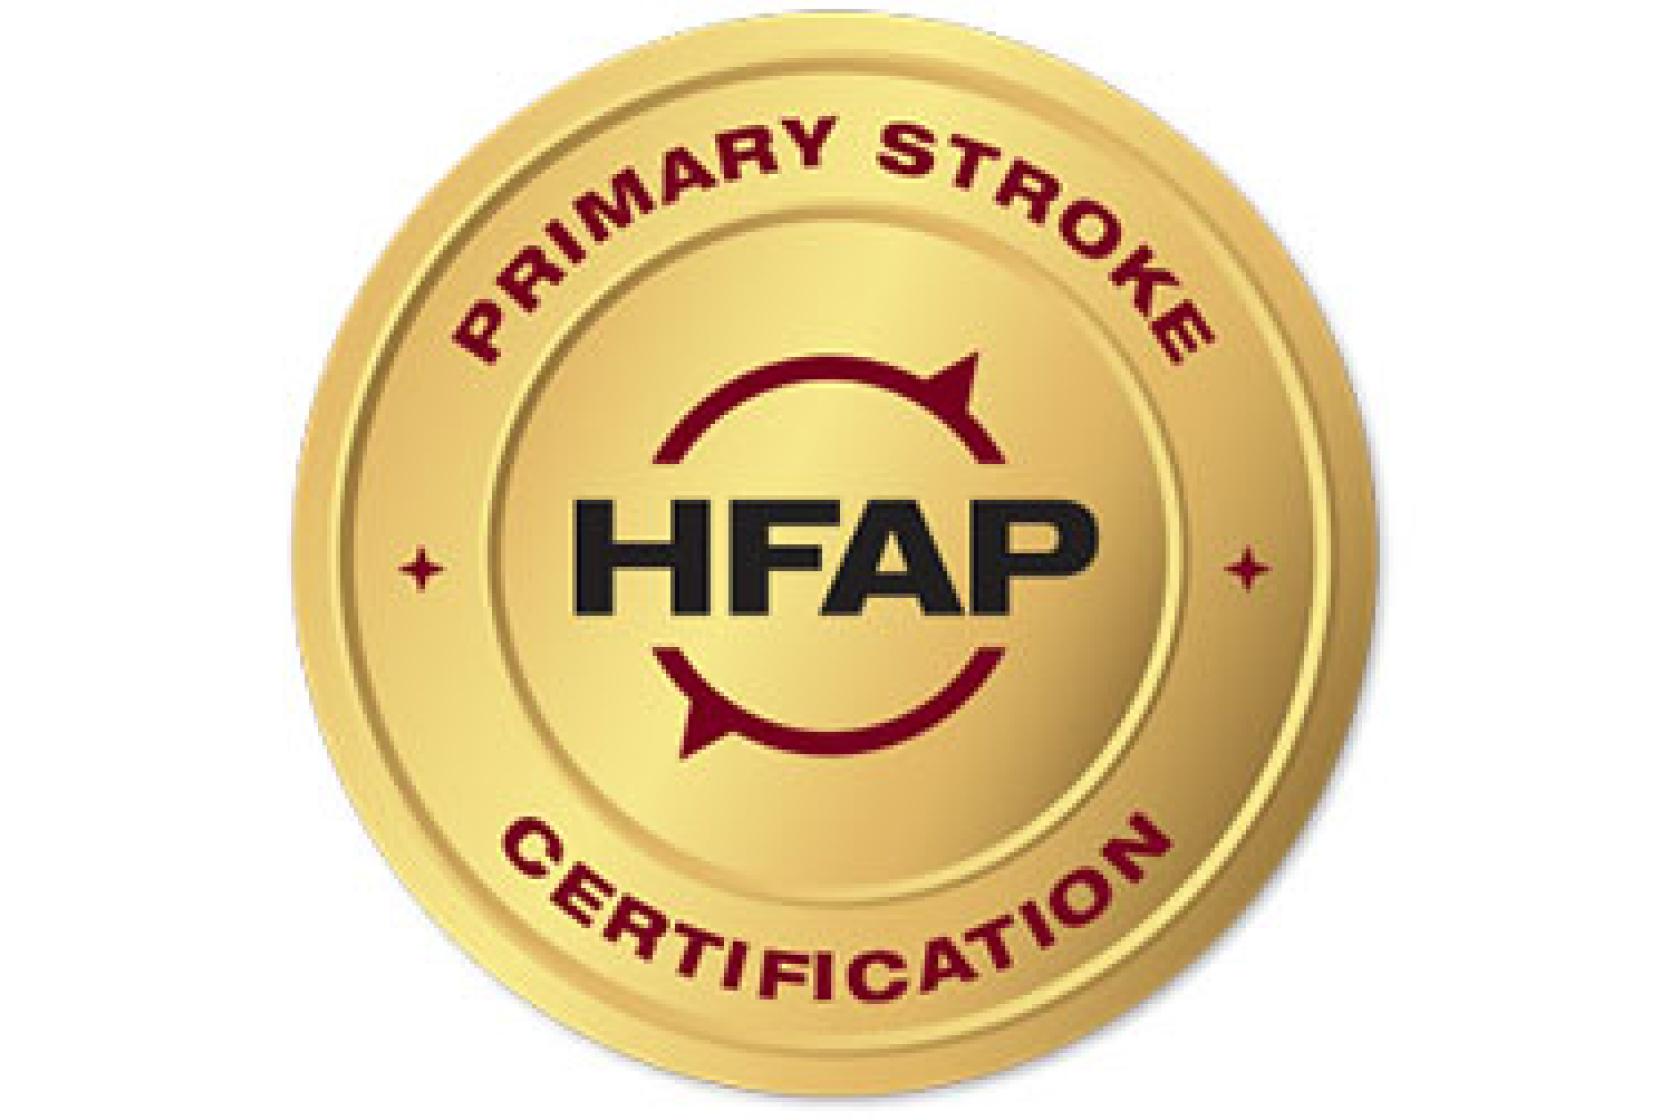 HFAP Accreditation